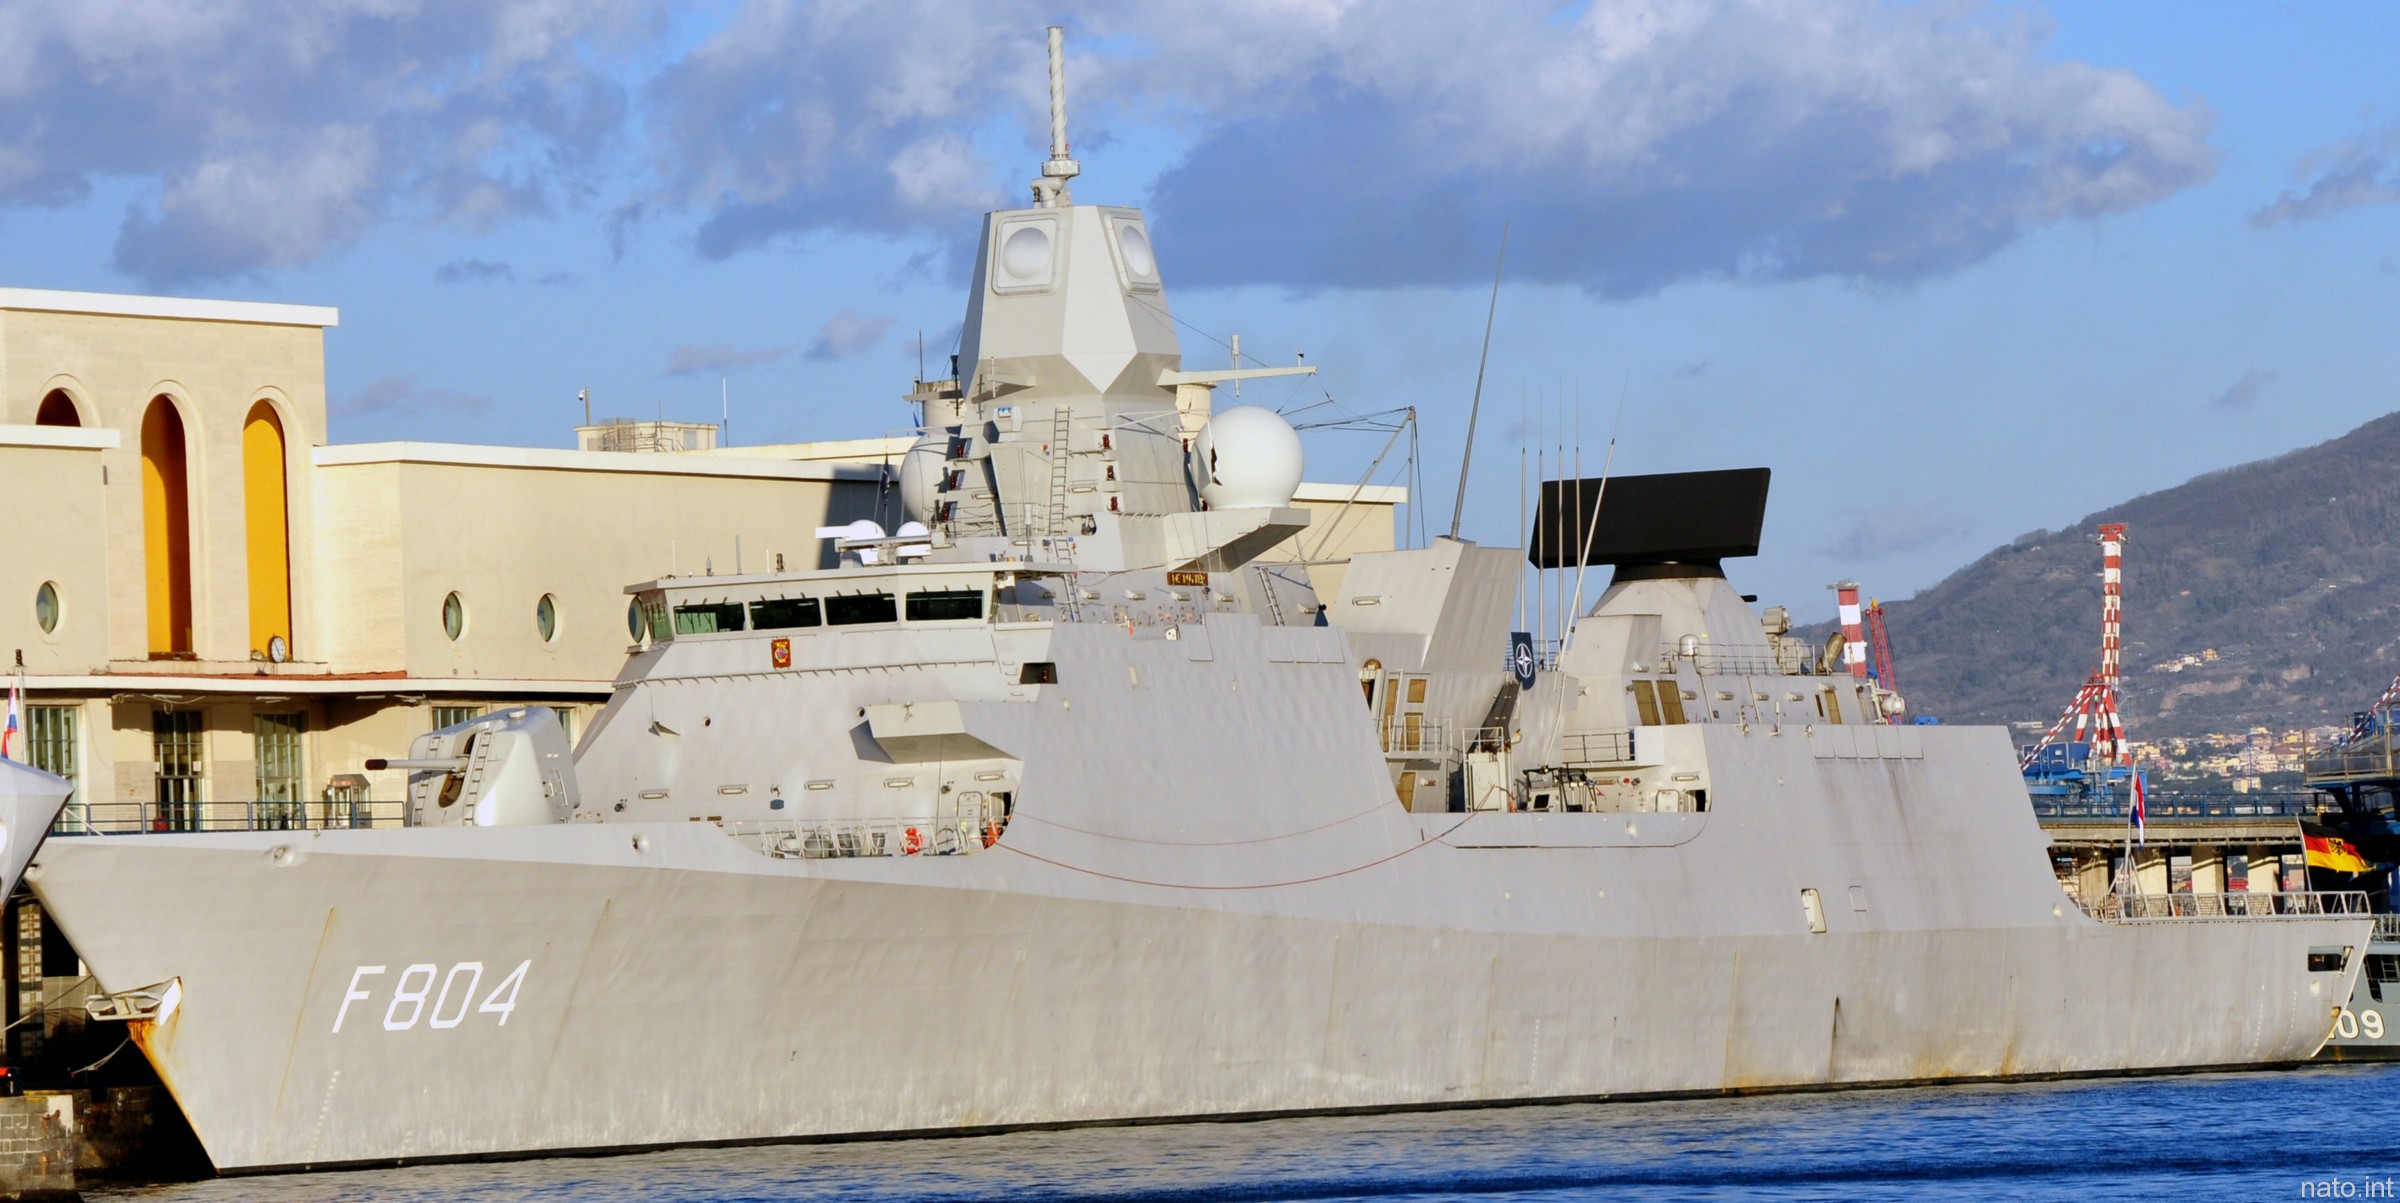 f-804 hnlms de ruyter guided missile frigate ffg lcf royal netherlands navy 25 nato